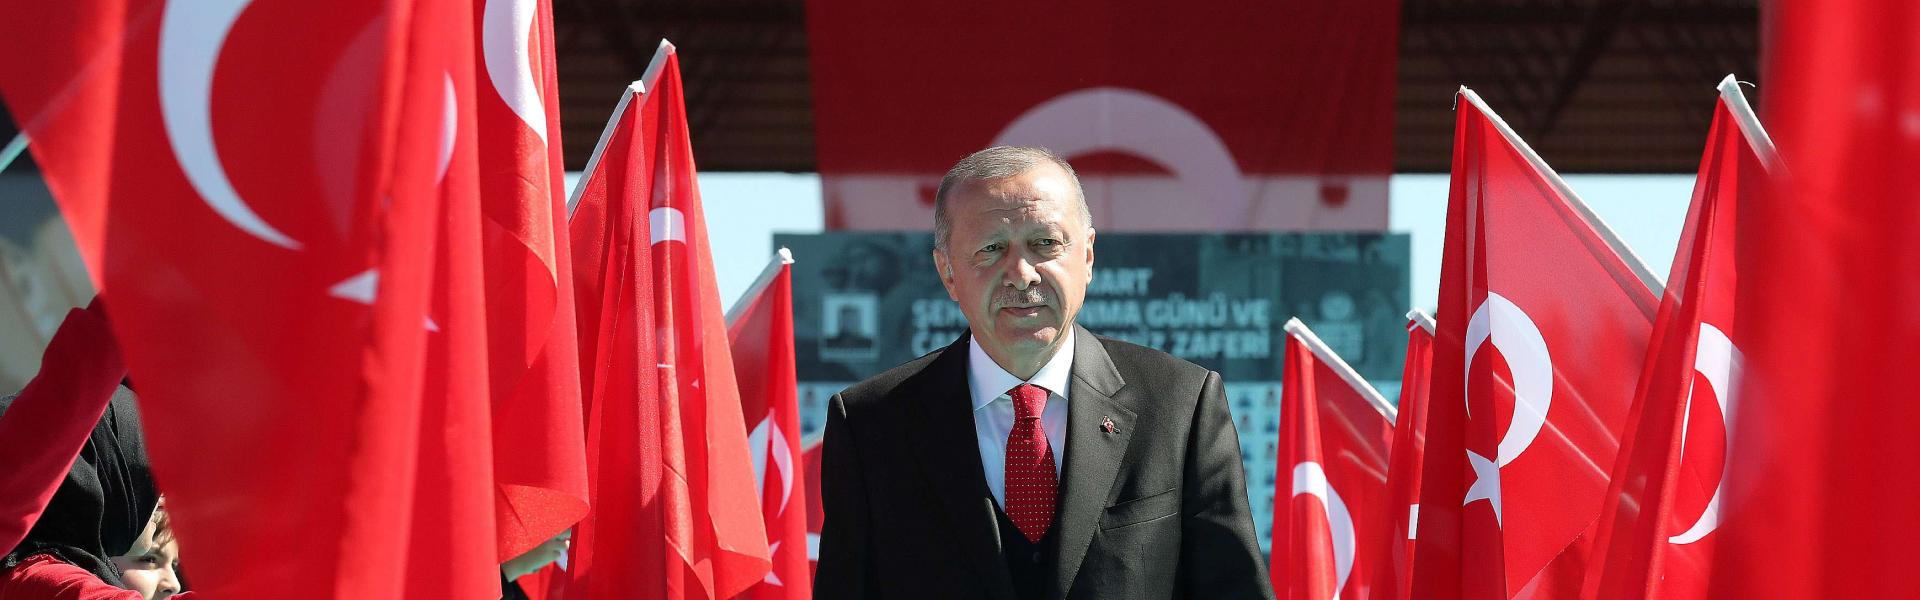 Australia warns all options on table over Erdoğan threat 1